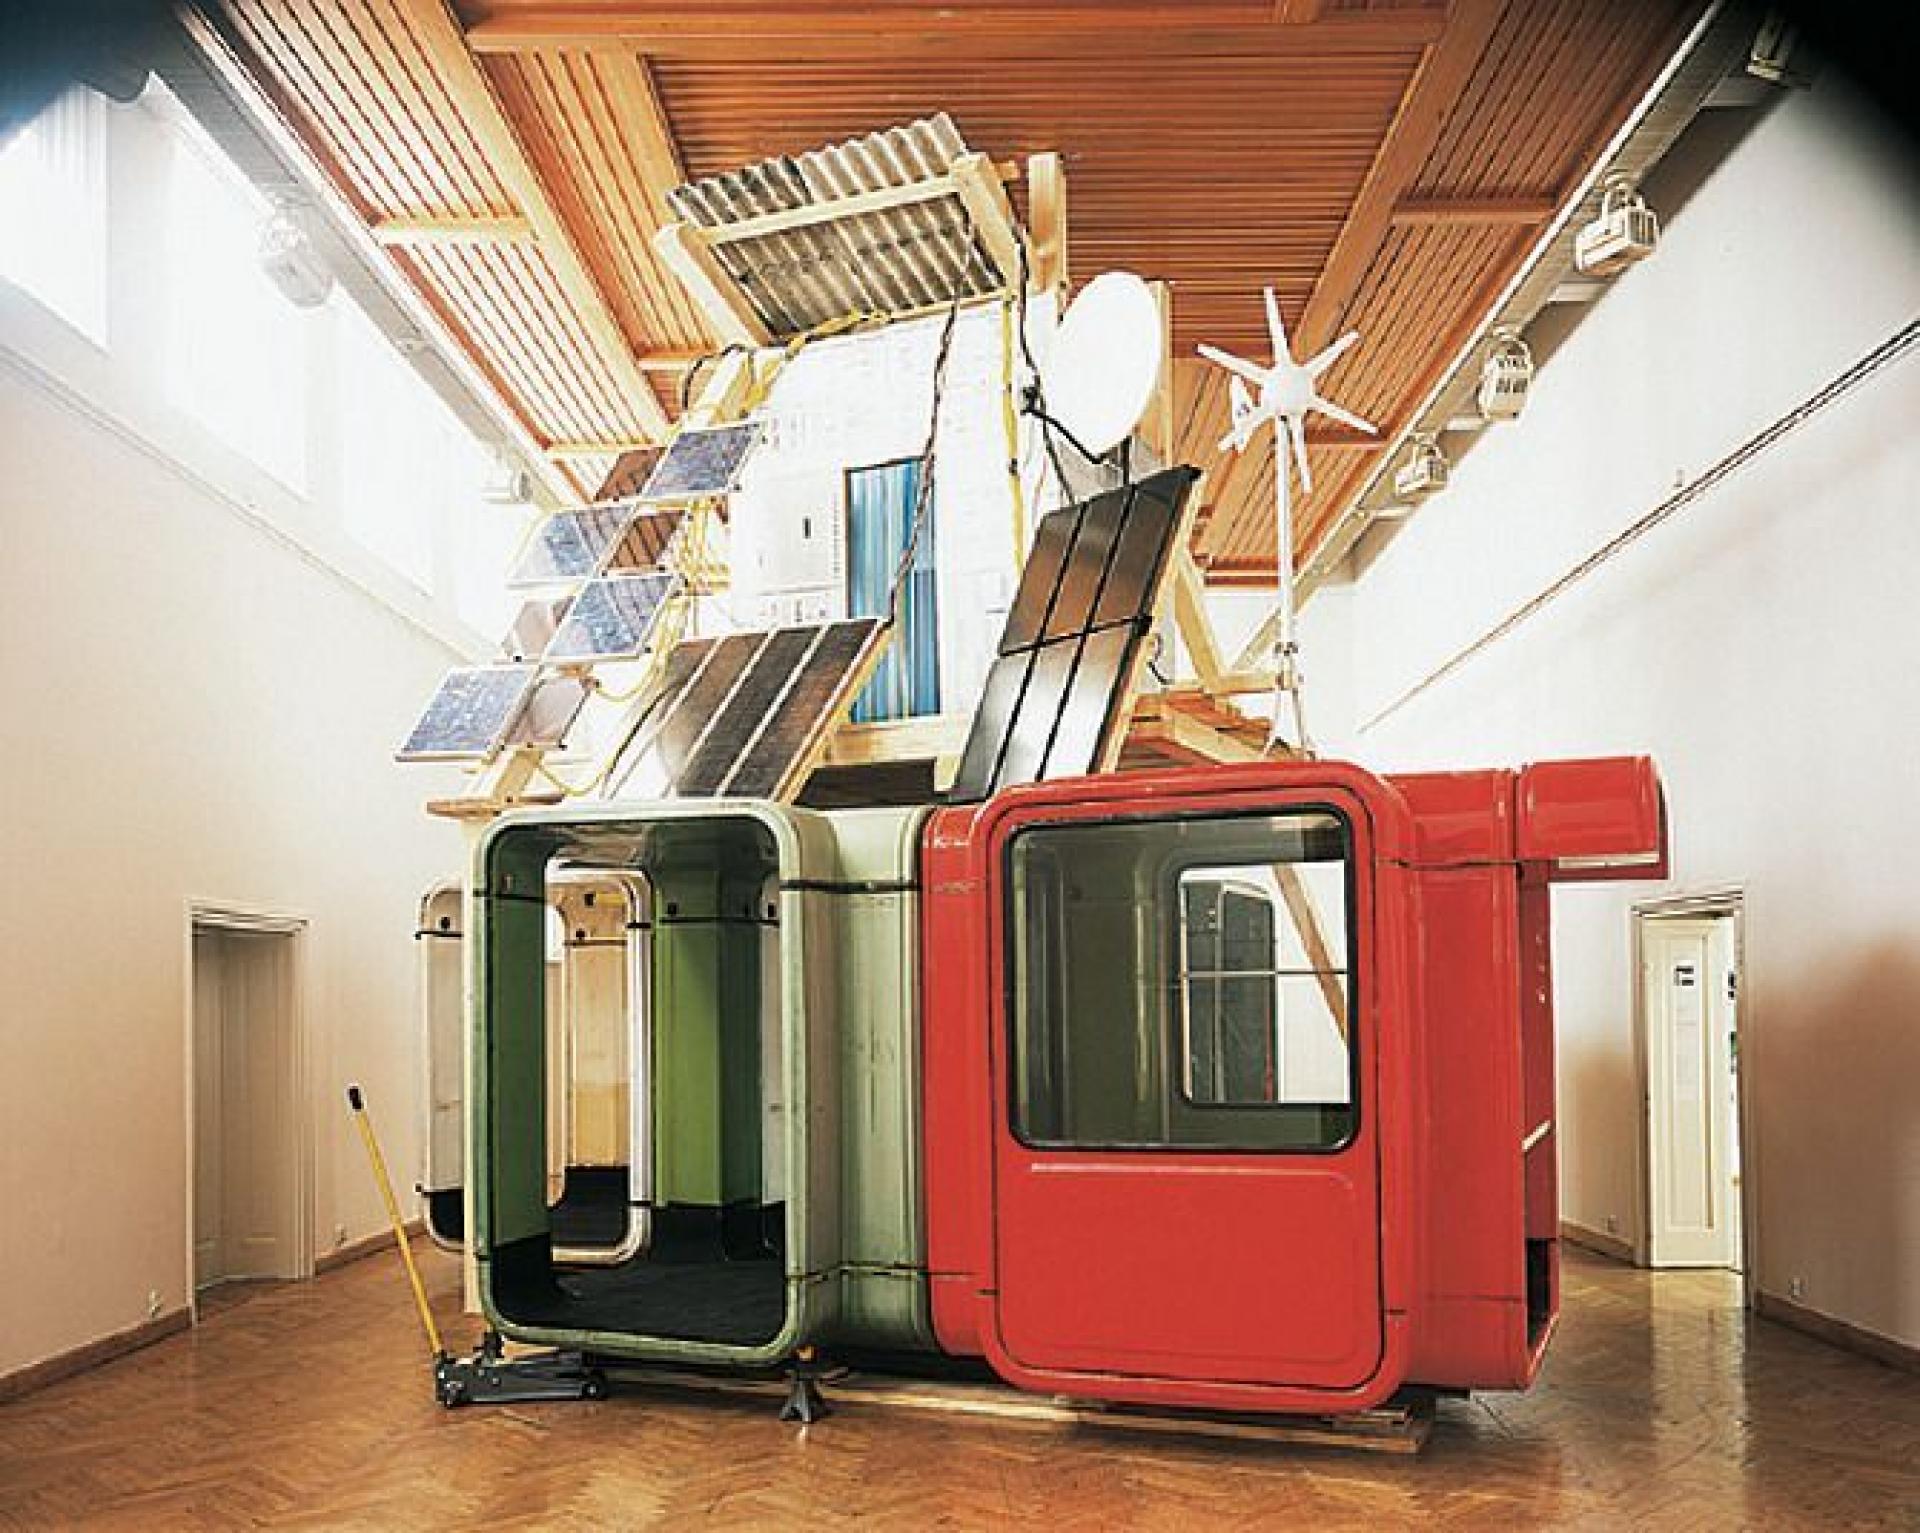 K67 as an installation by Marjetica Potrč in Modern Gallery Ljubljana. | Photo via Next Stop Kiosk